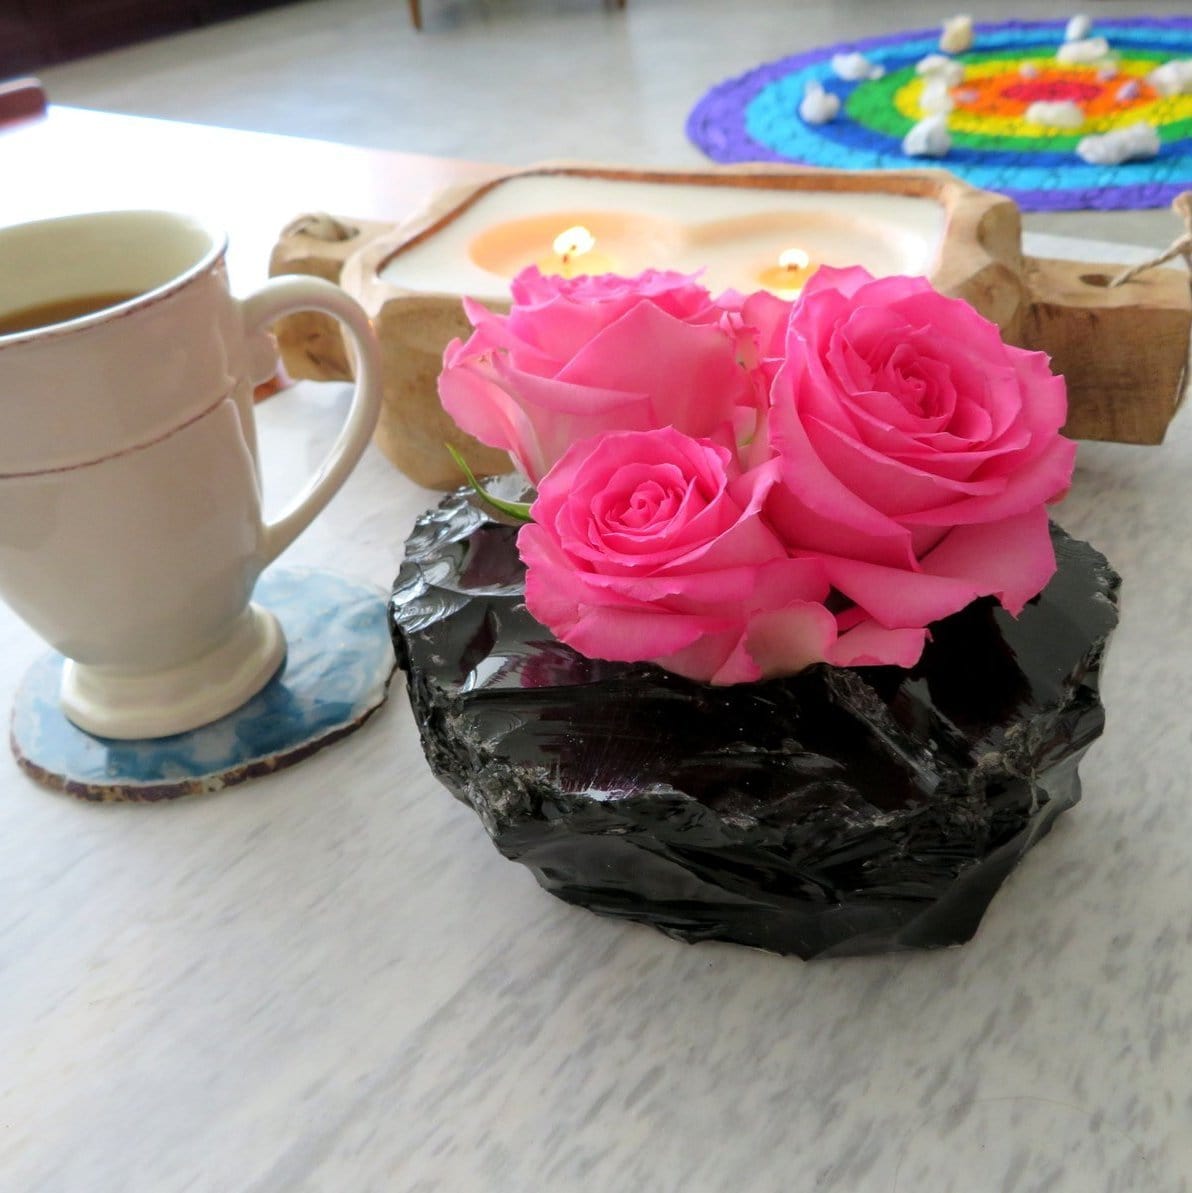 Black Obsidian Planter with pink roses inside